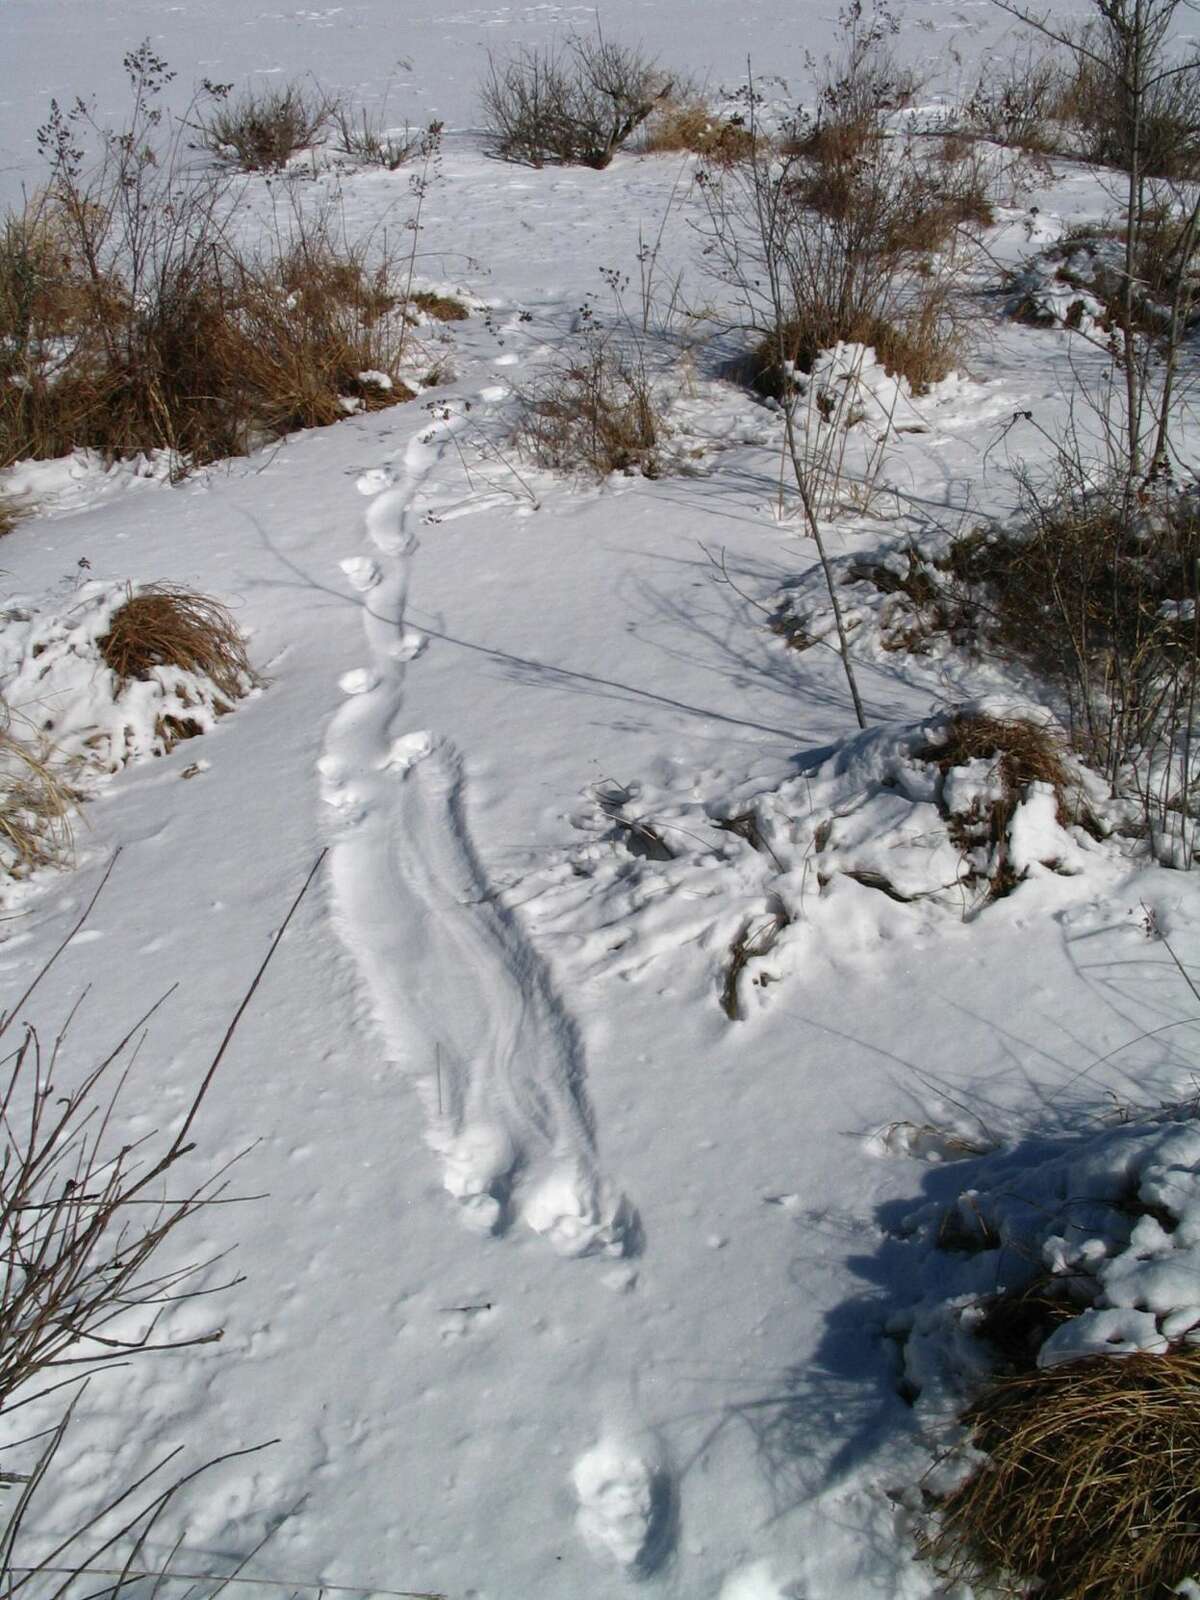 Wildlife tracks in the snow.